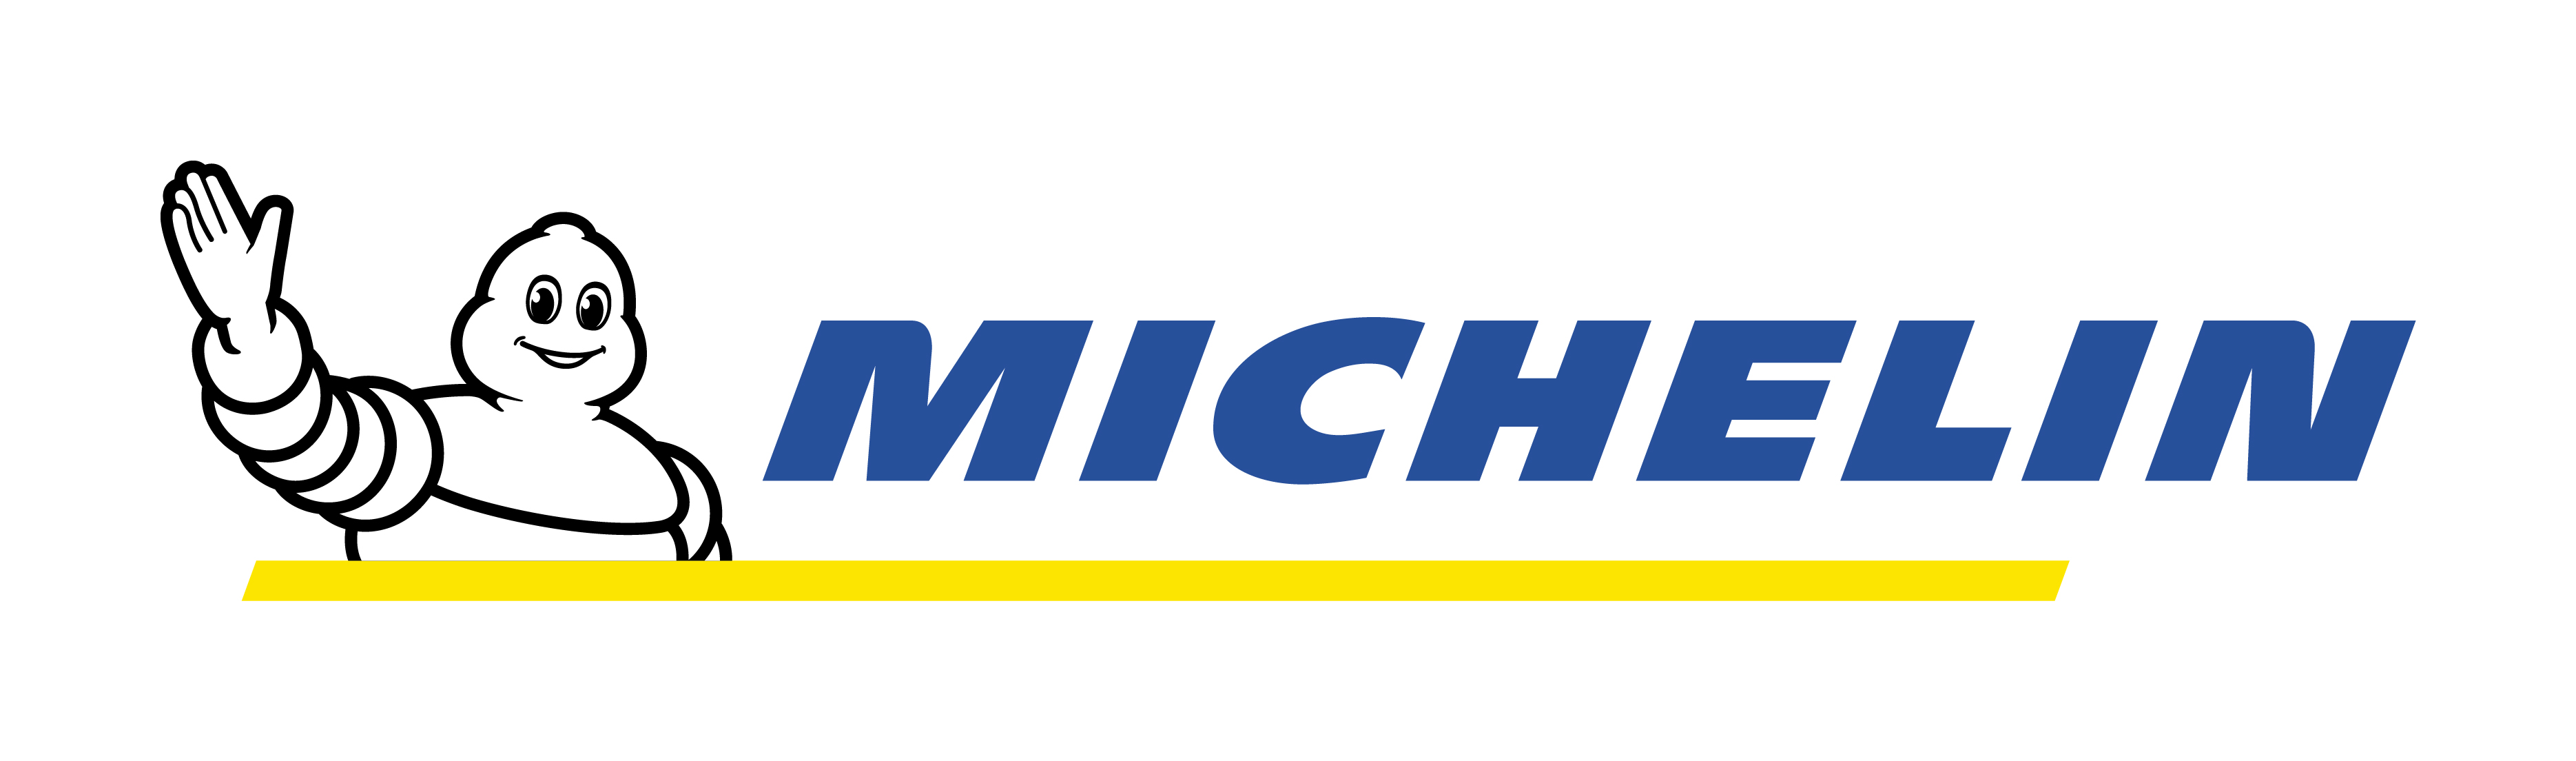 Michelin_横ロゴ_白背景_青色、黄色